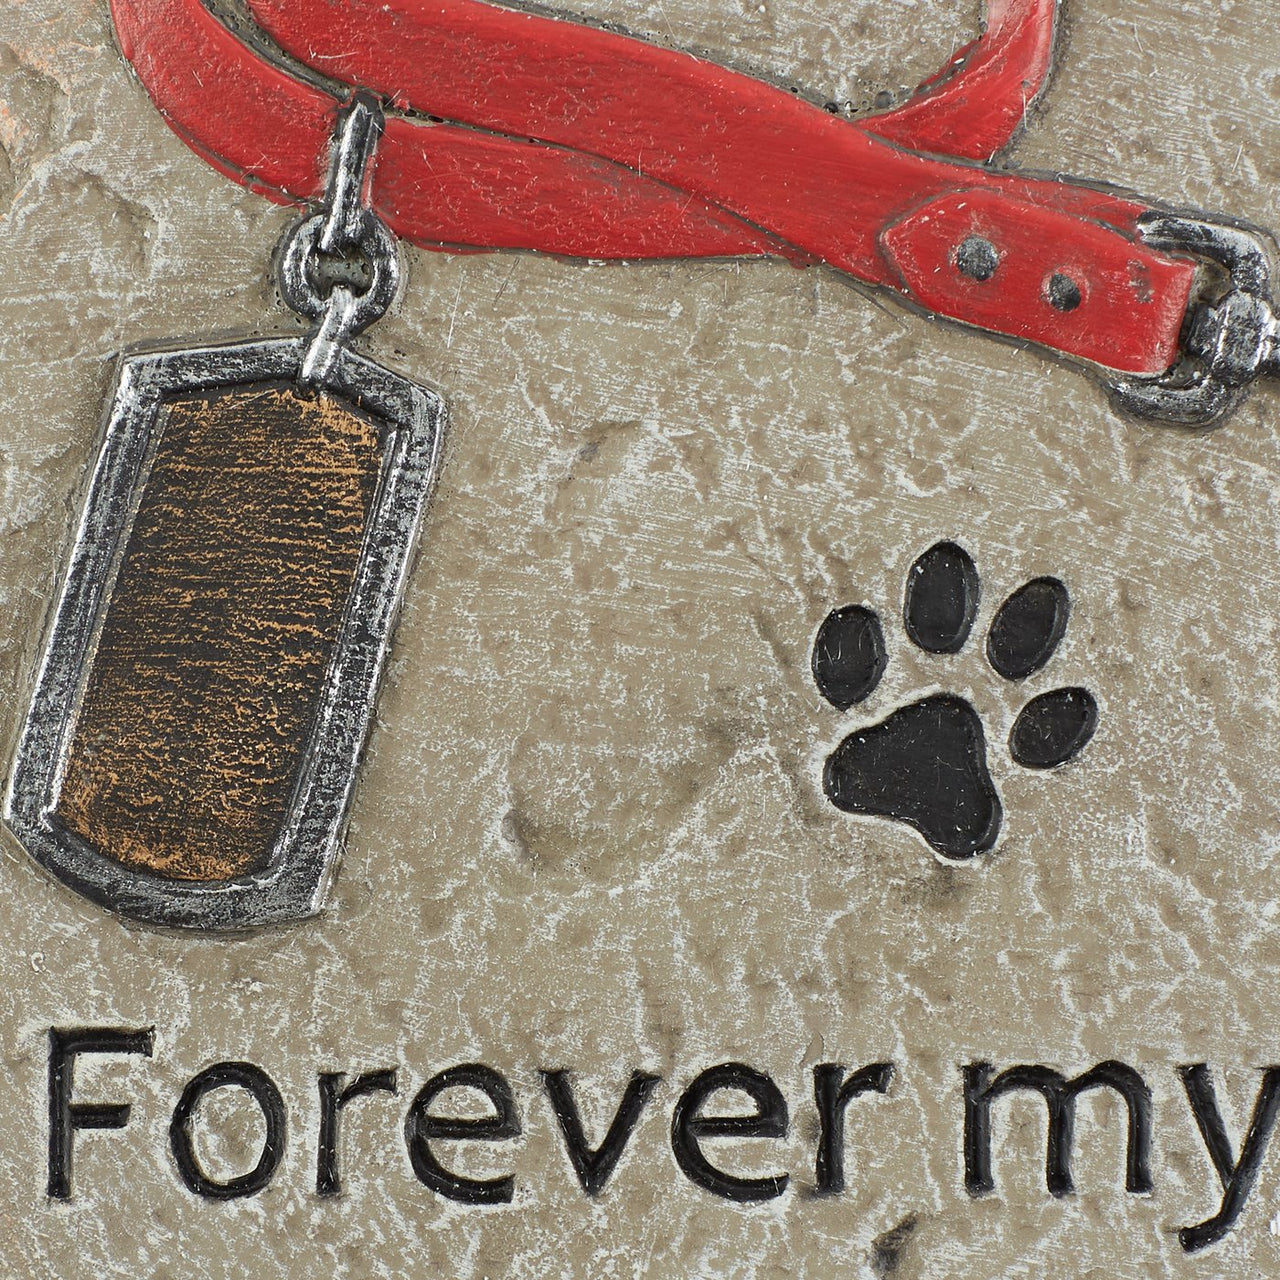 Forever My Best Friend Pet Memorial Stone